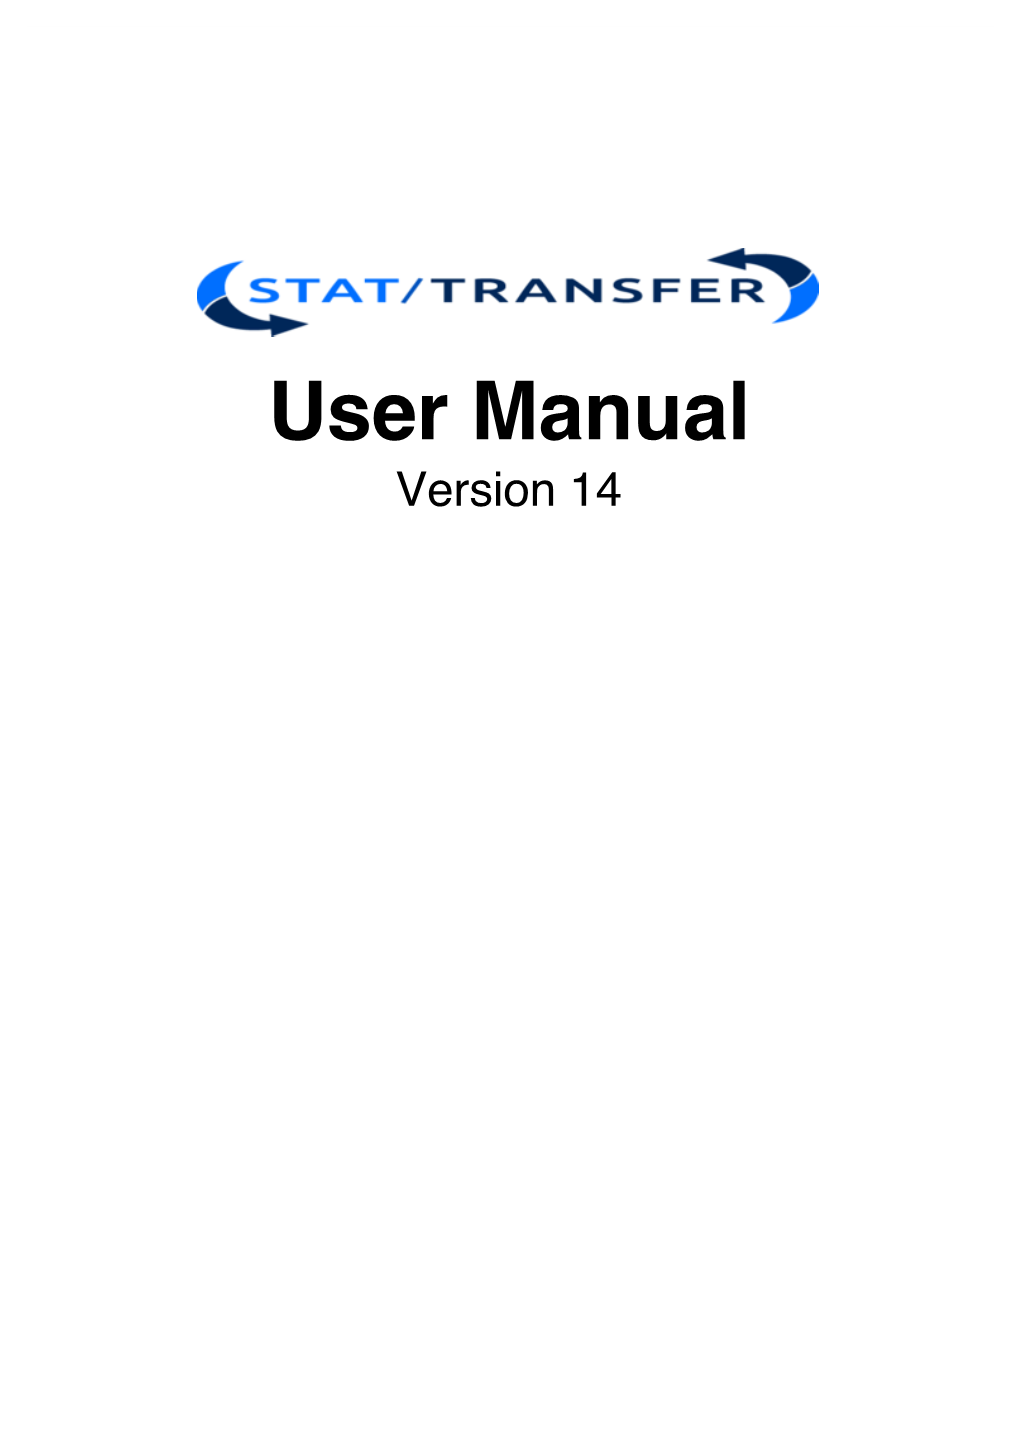 User Manual Version 14 Statatransfer User Manual